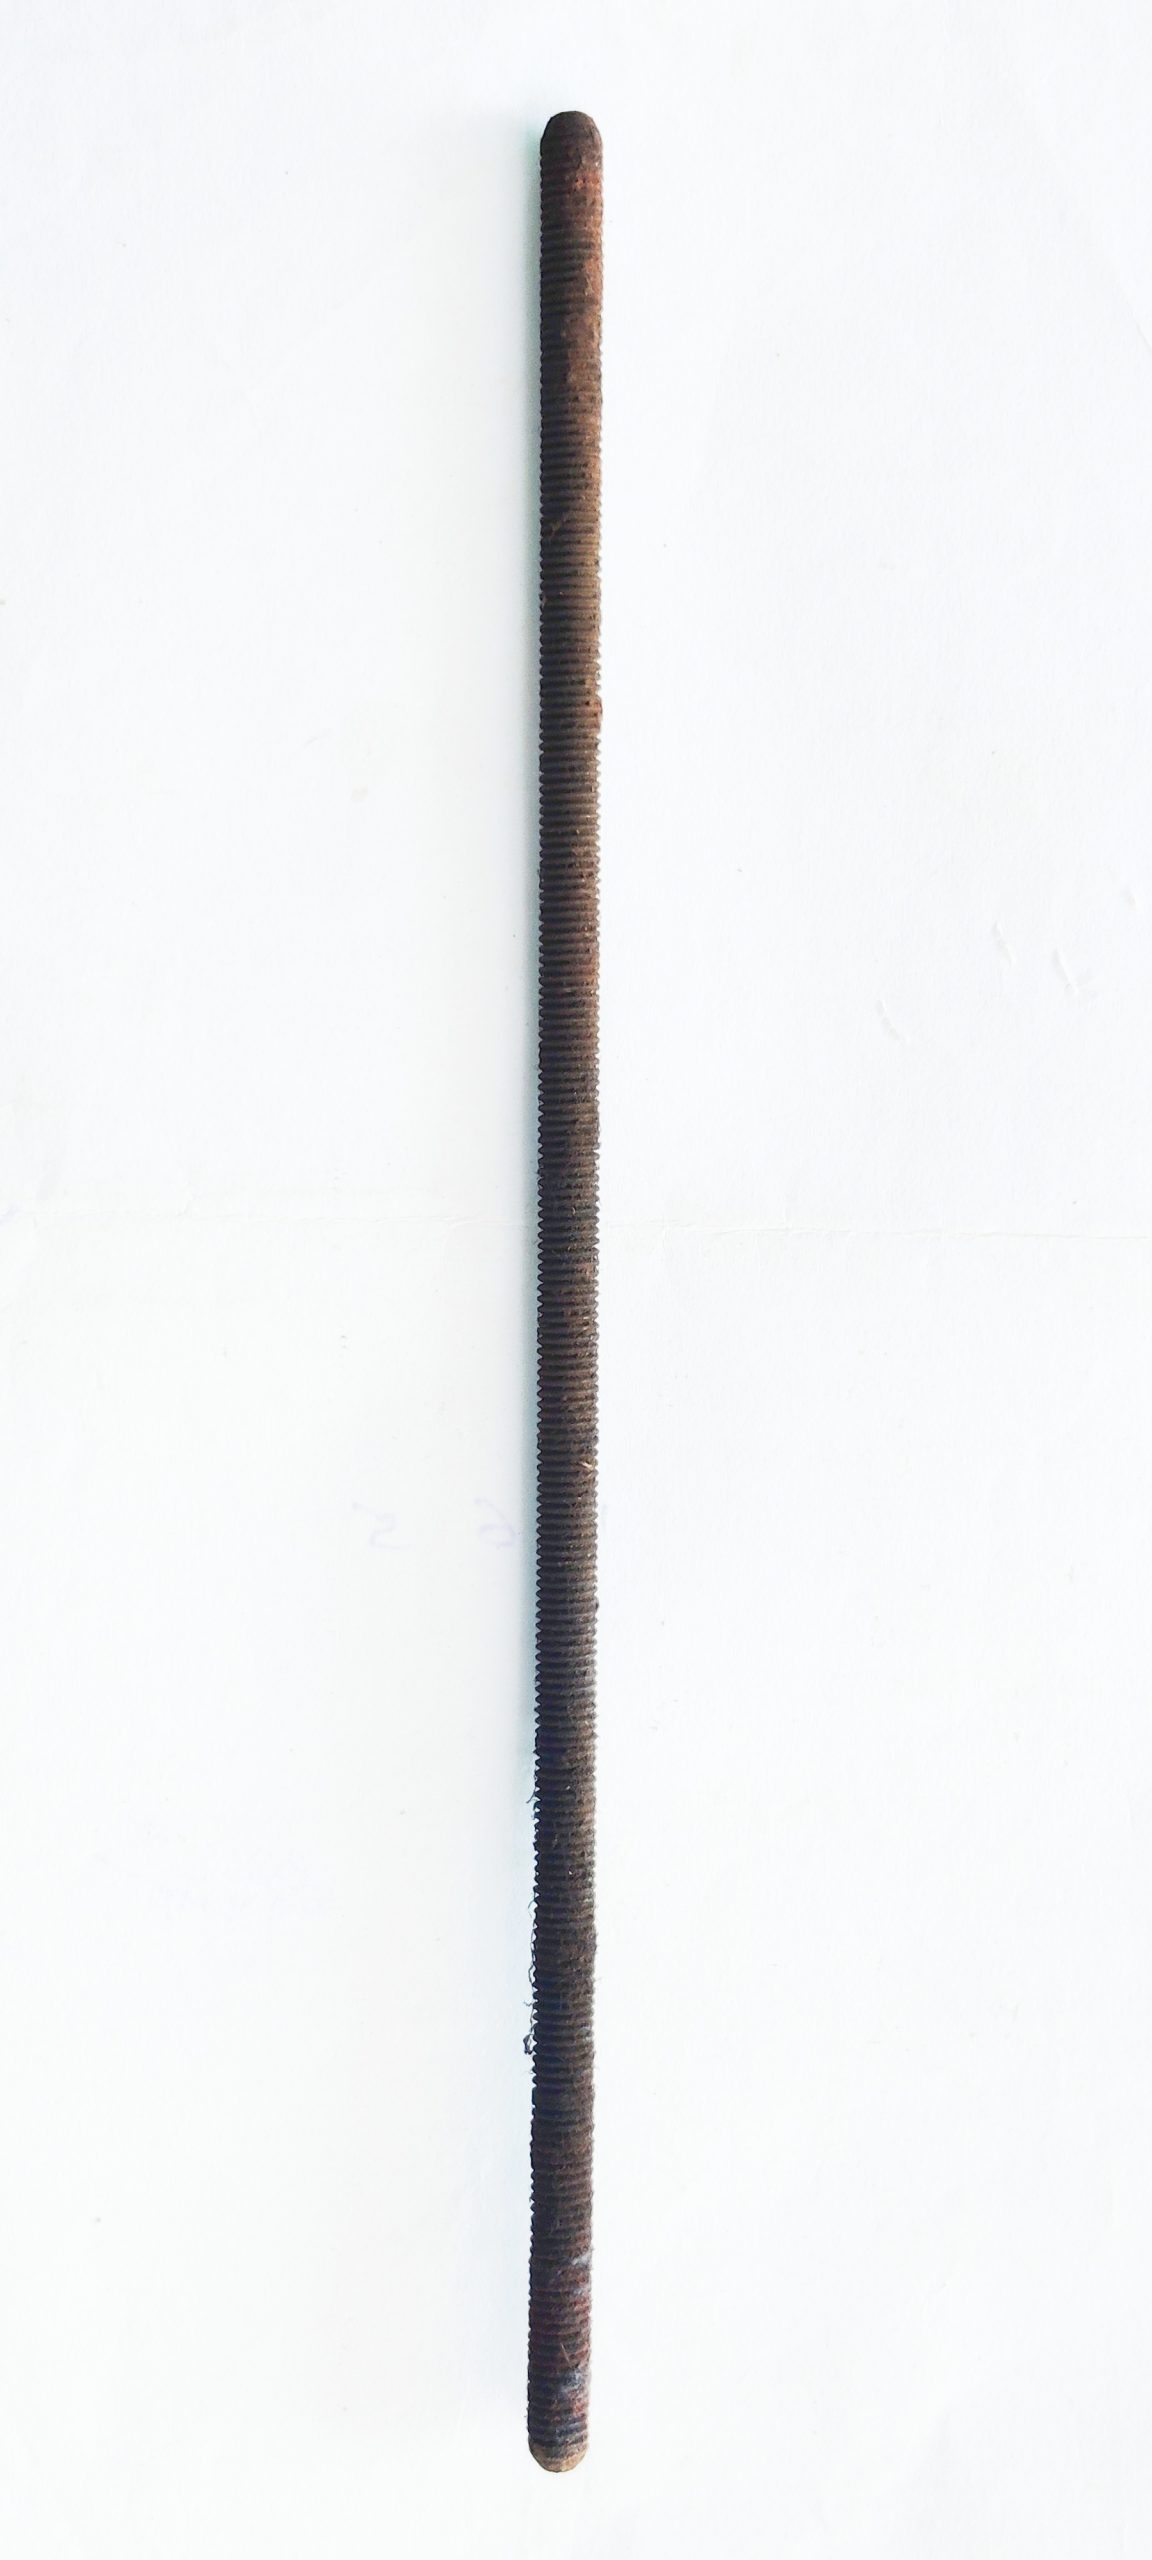 A rusty metallic rod